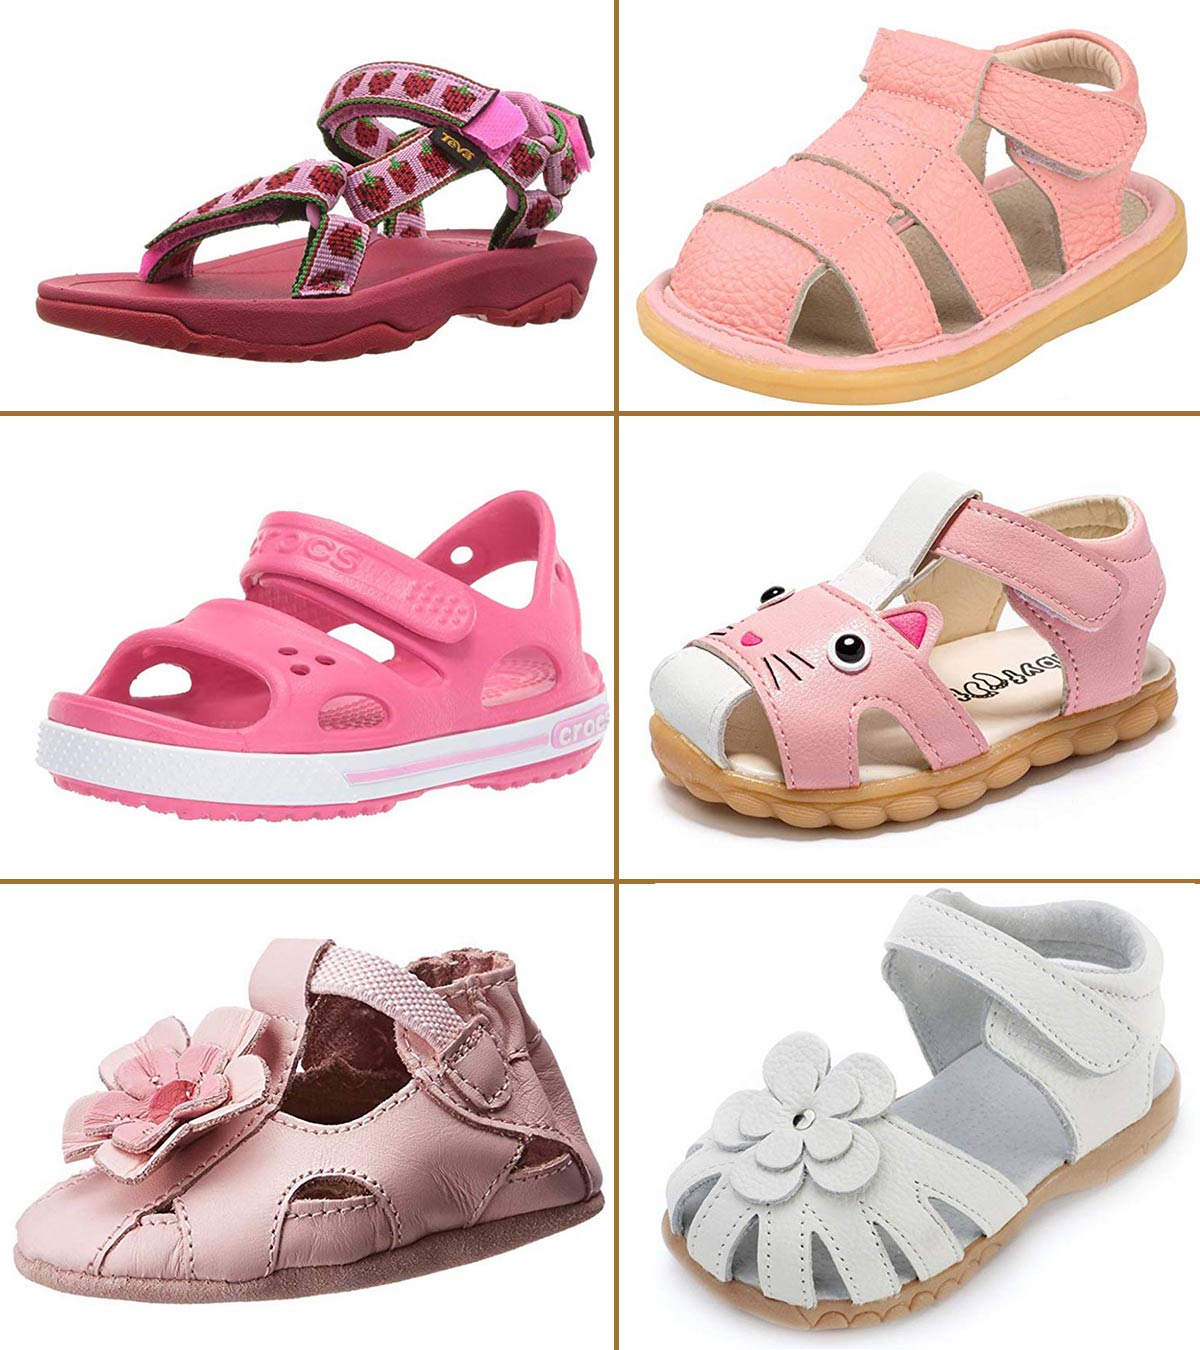 Femizee Kid Girls Leather Sandals Toddler Little Girls Princess Dress Shoes